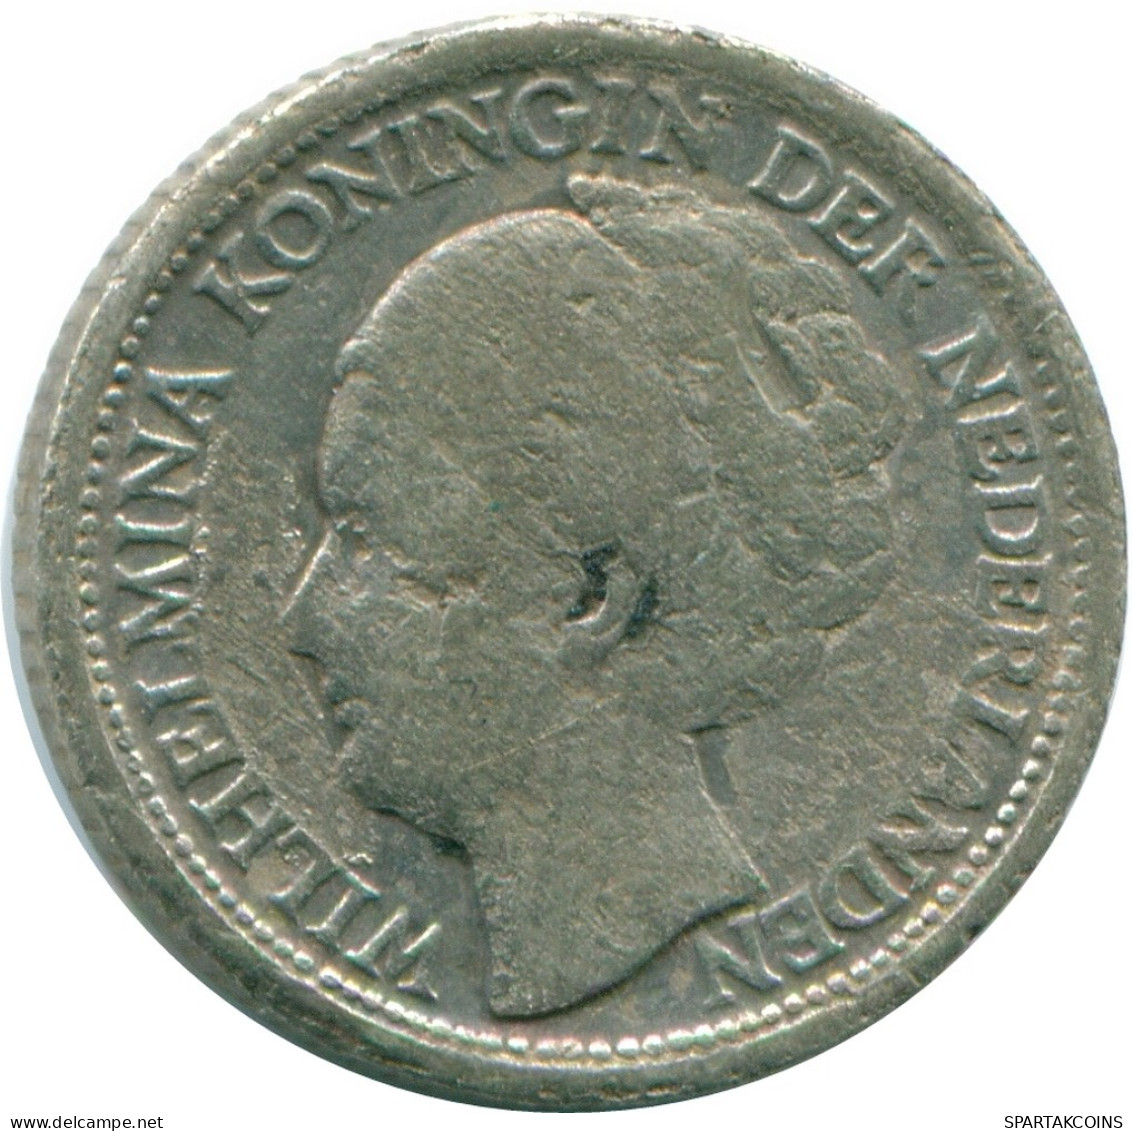 1/4 GULDEN 1944 CURACAO Netherlands SILVER Colonial Coin #NL10642.4.U - Curacao